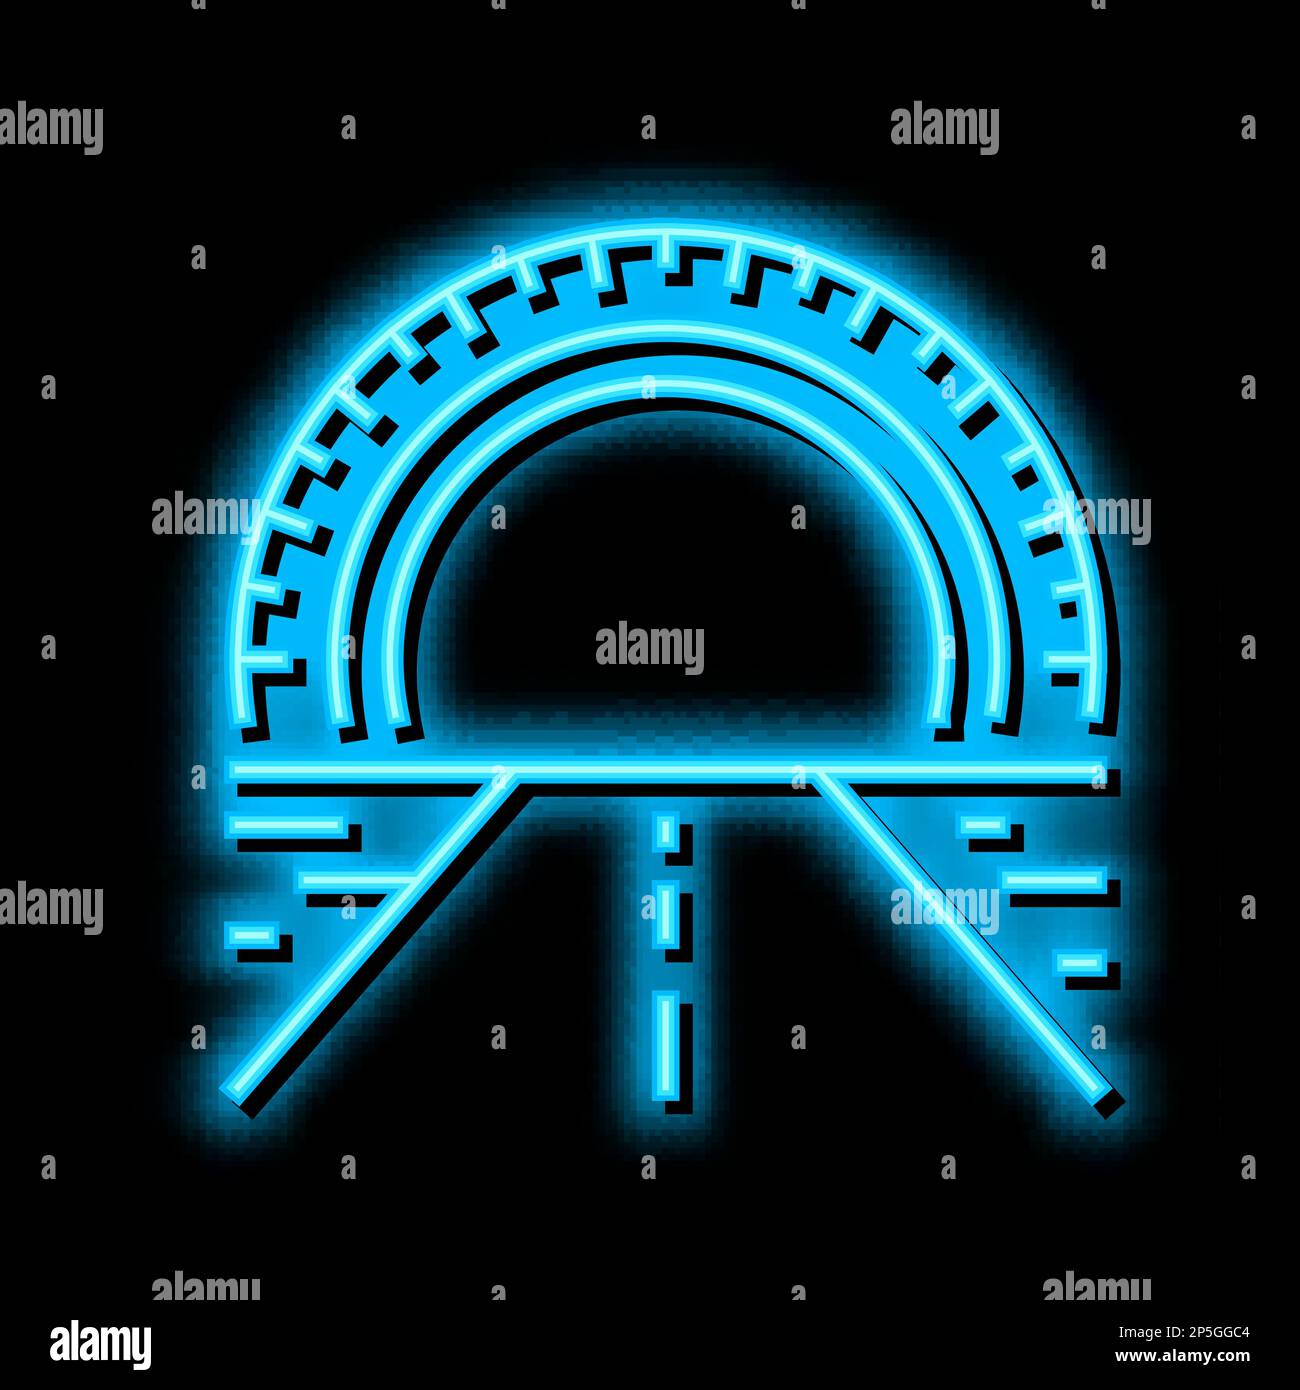 highway tires neon glow icon illustration Stock Vector